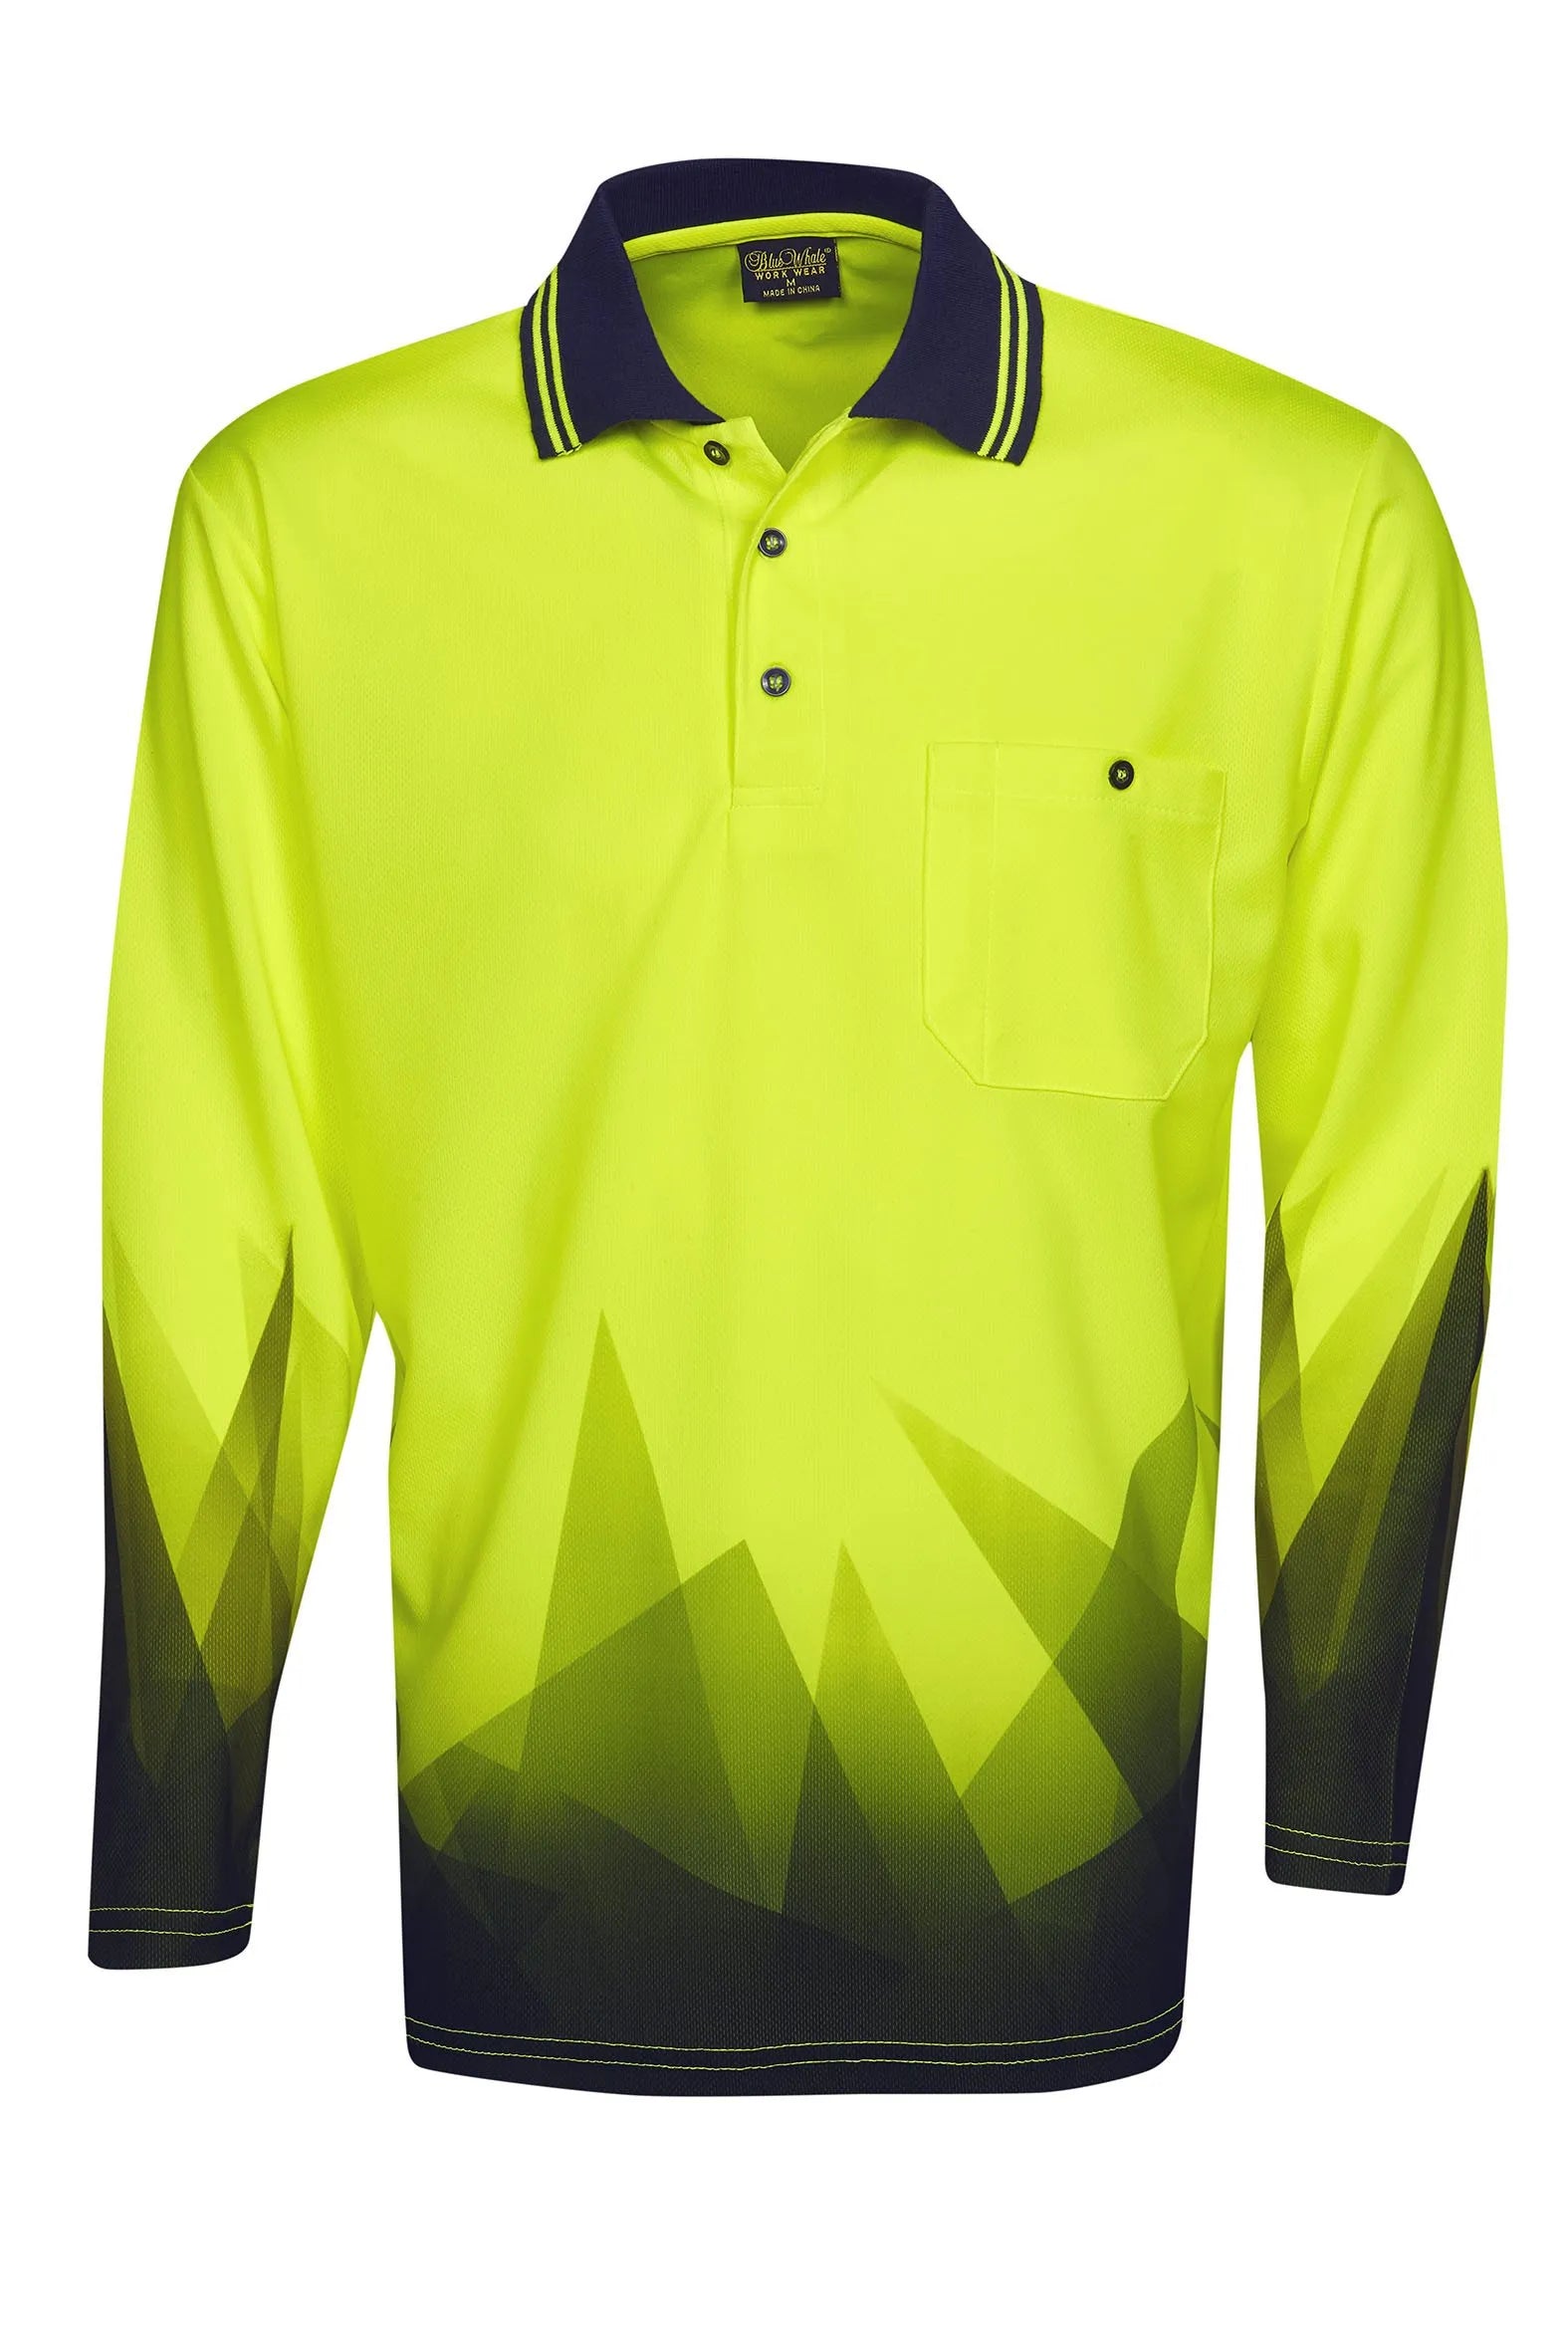 P68 Triangular Design L/S Hi Vis Polo Shirt - Safe-T-Rex Workwear Pty Ltd